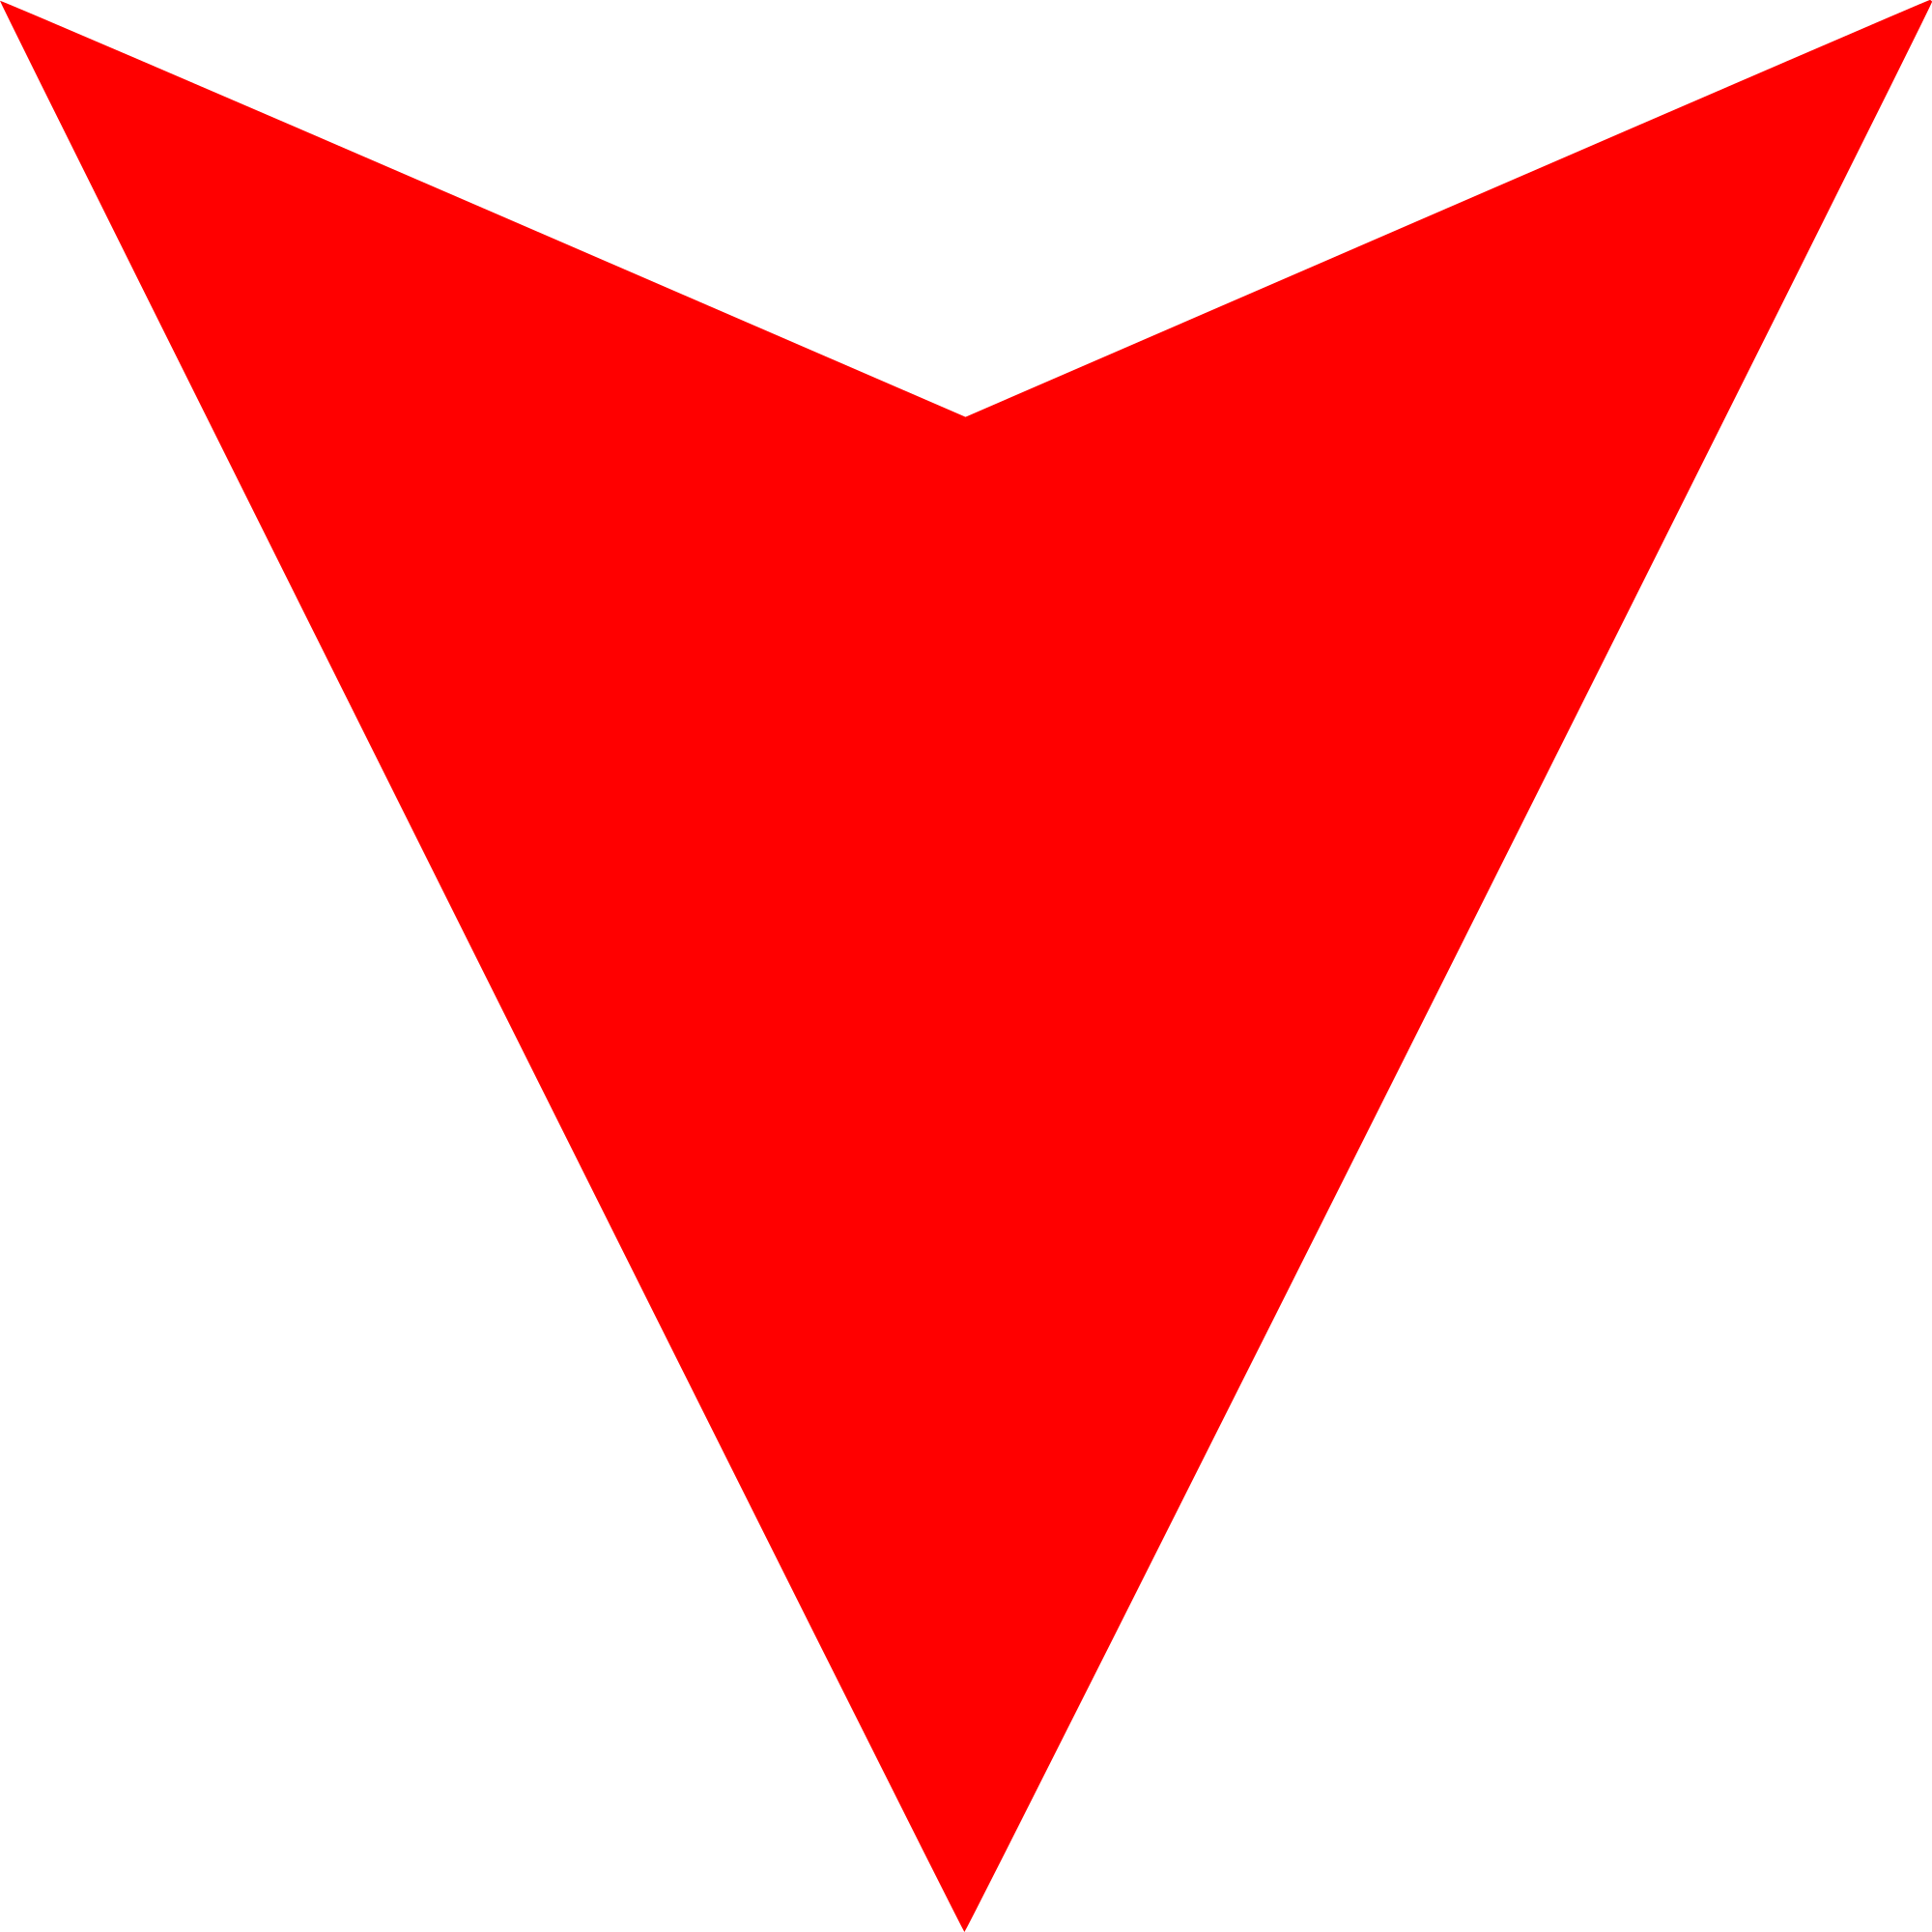 Open - Red Arrow Down (2000x2000)